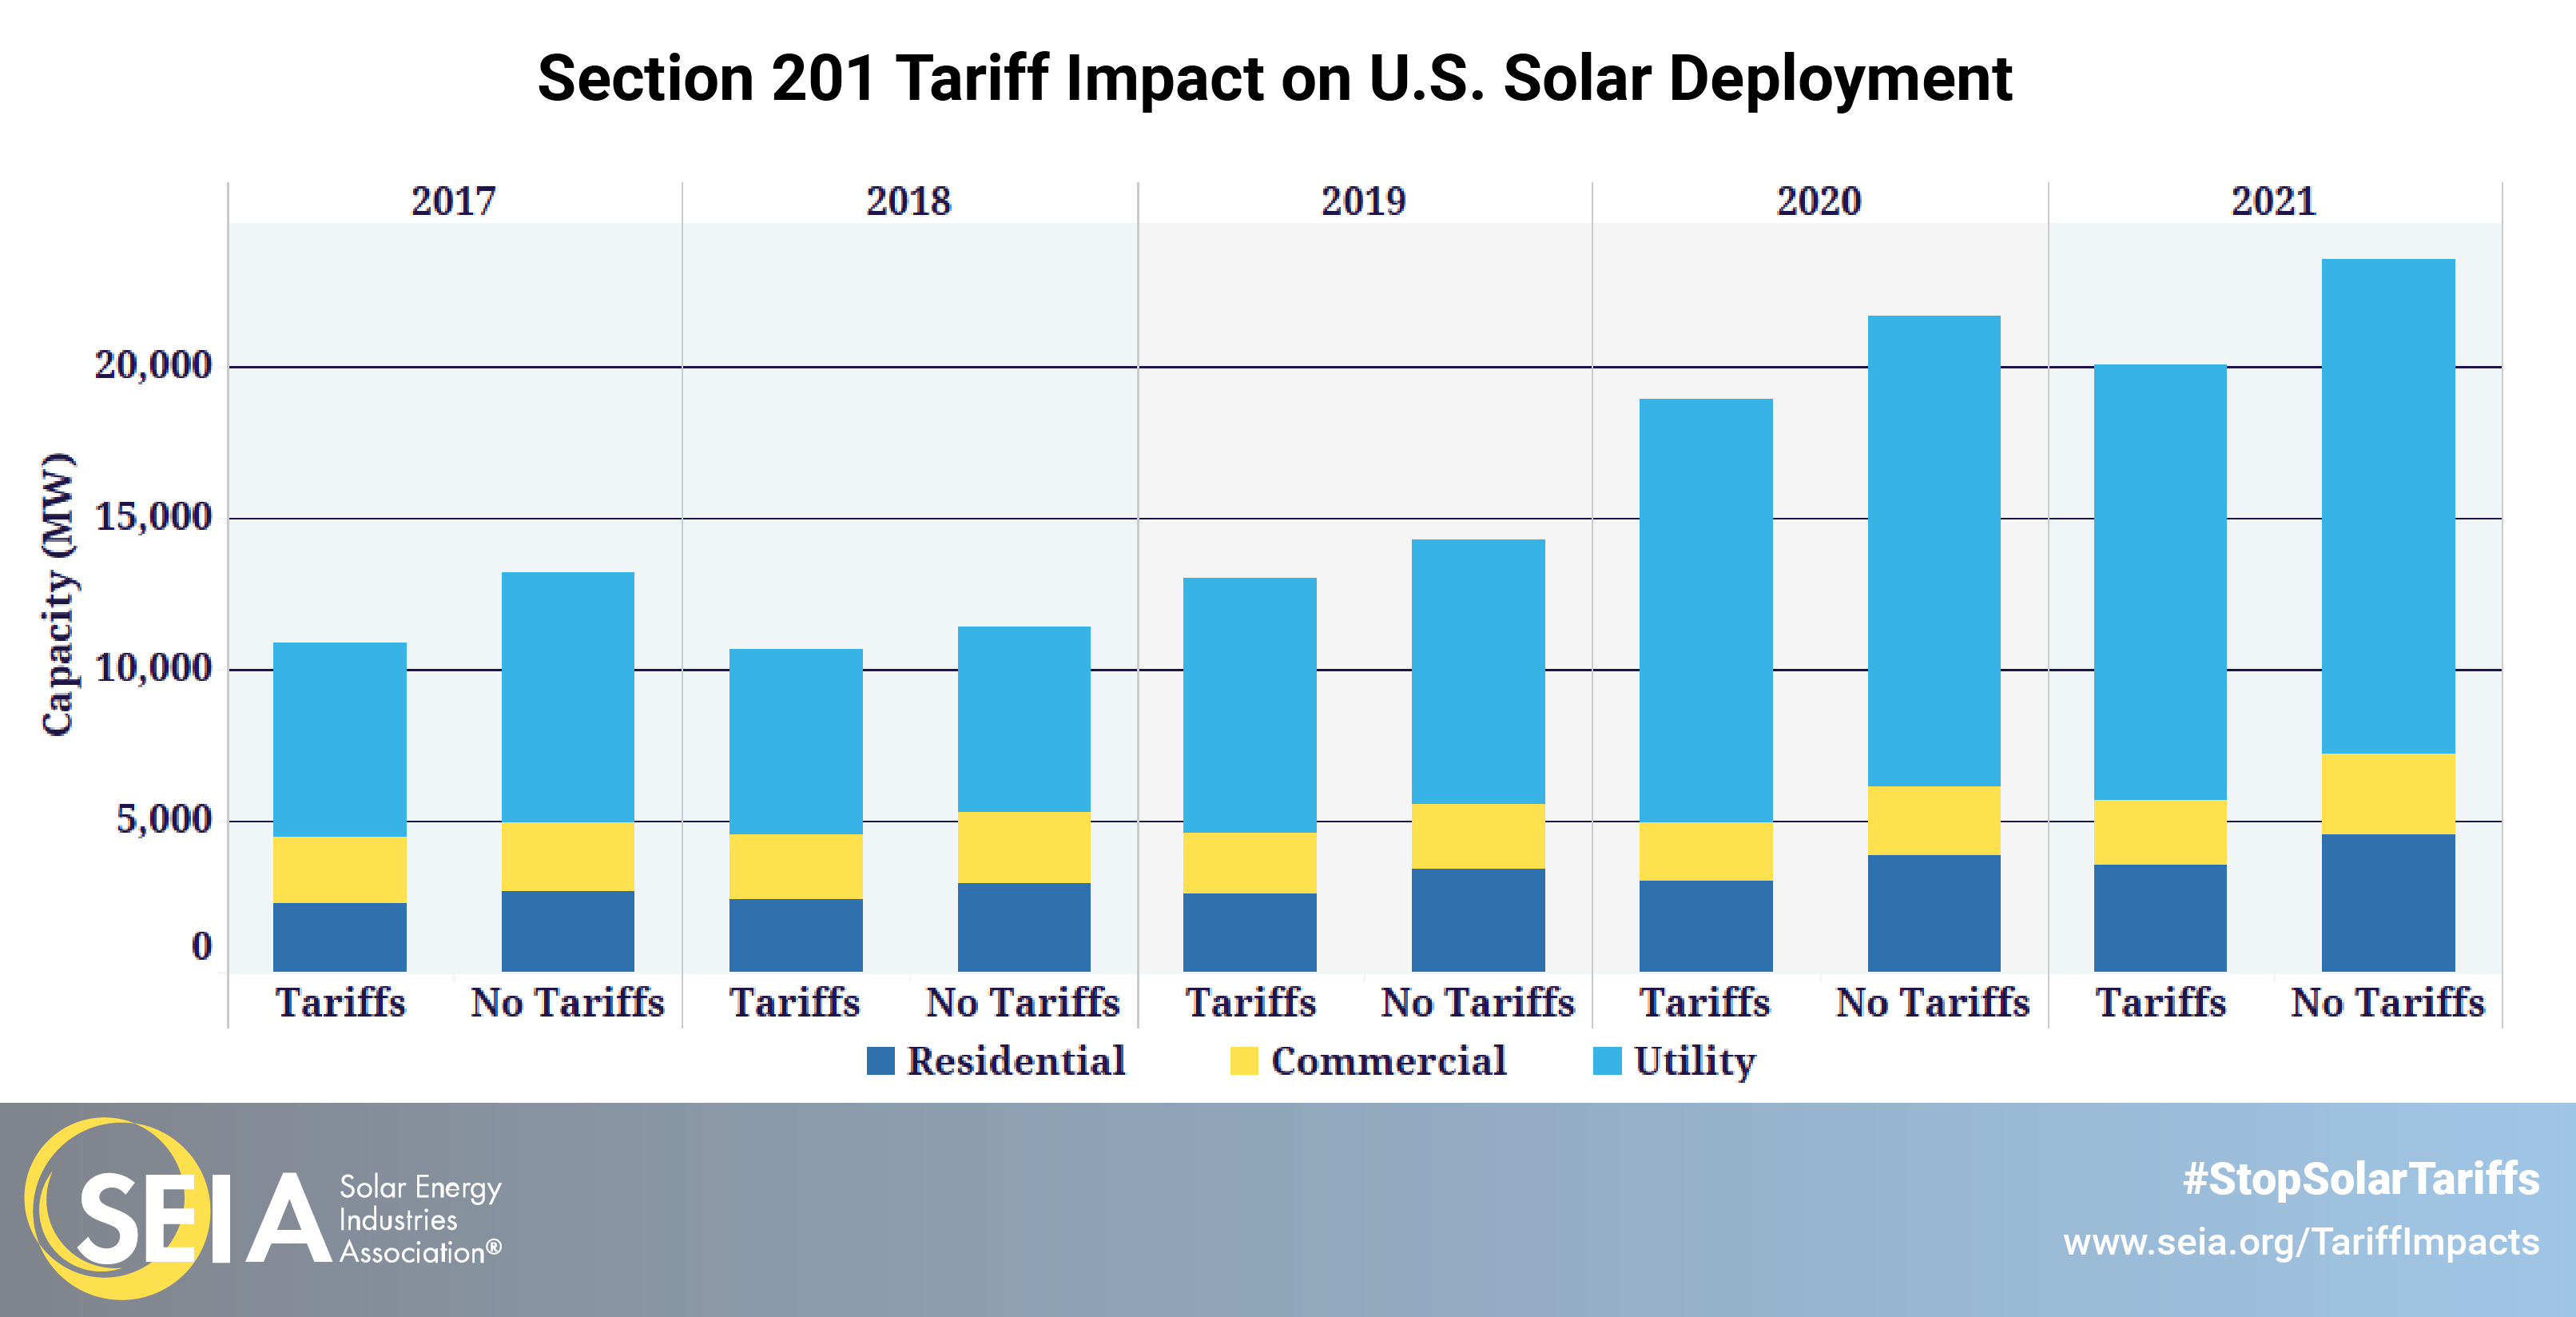 section 201 tariffs impact on u.s. solar deployment